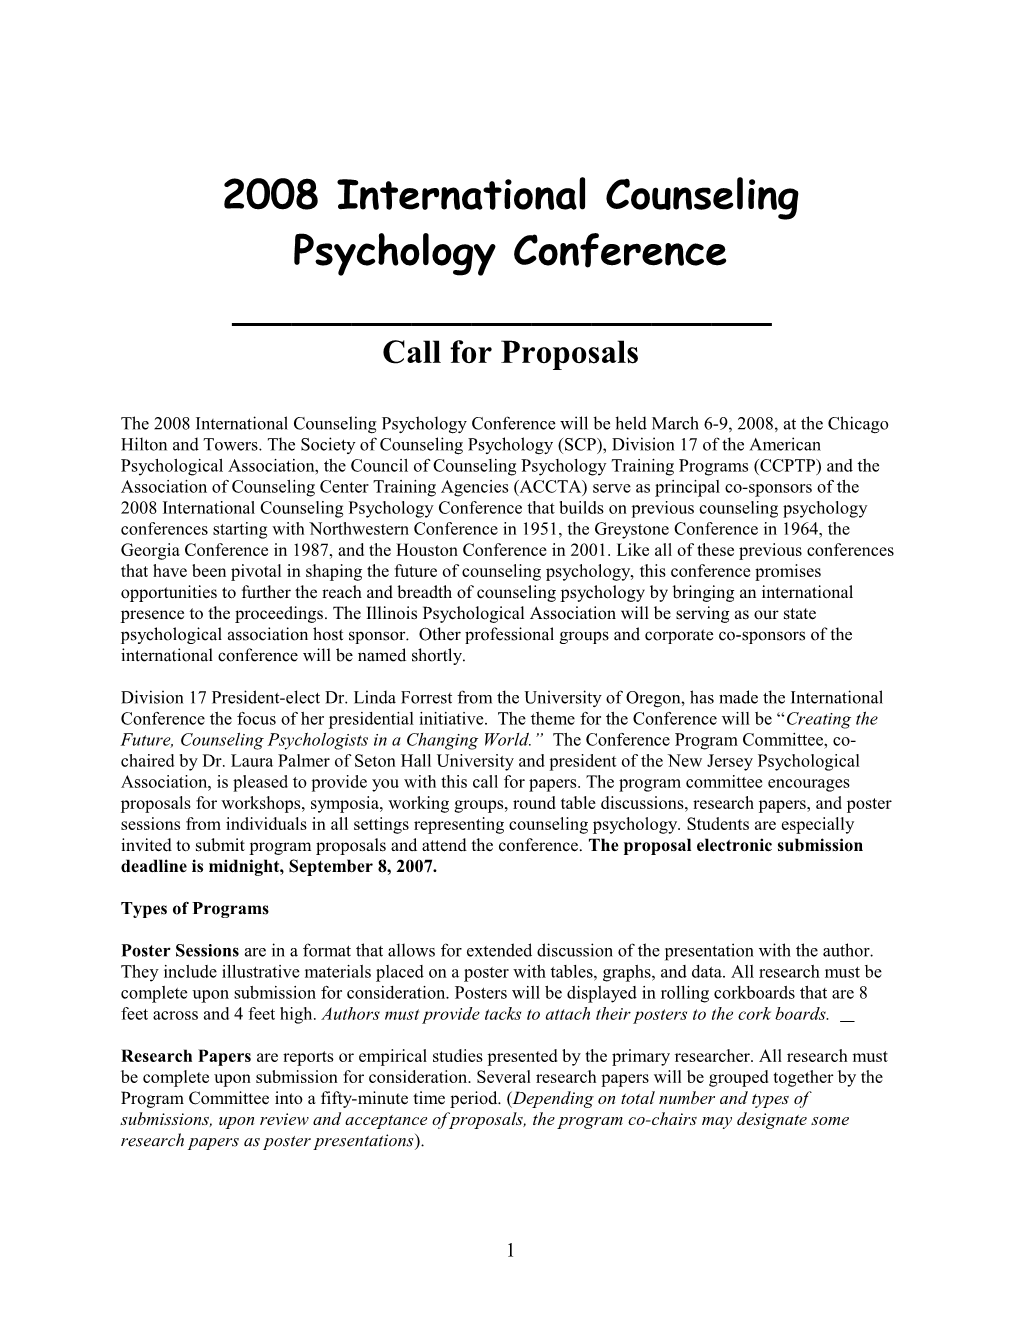 2008 International Counseling Psychology Conference